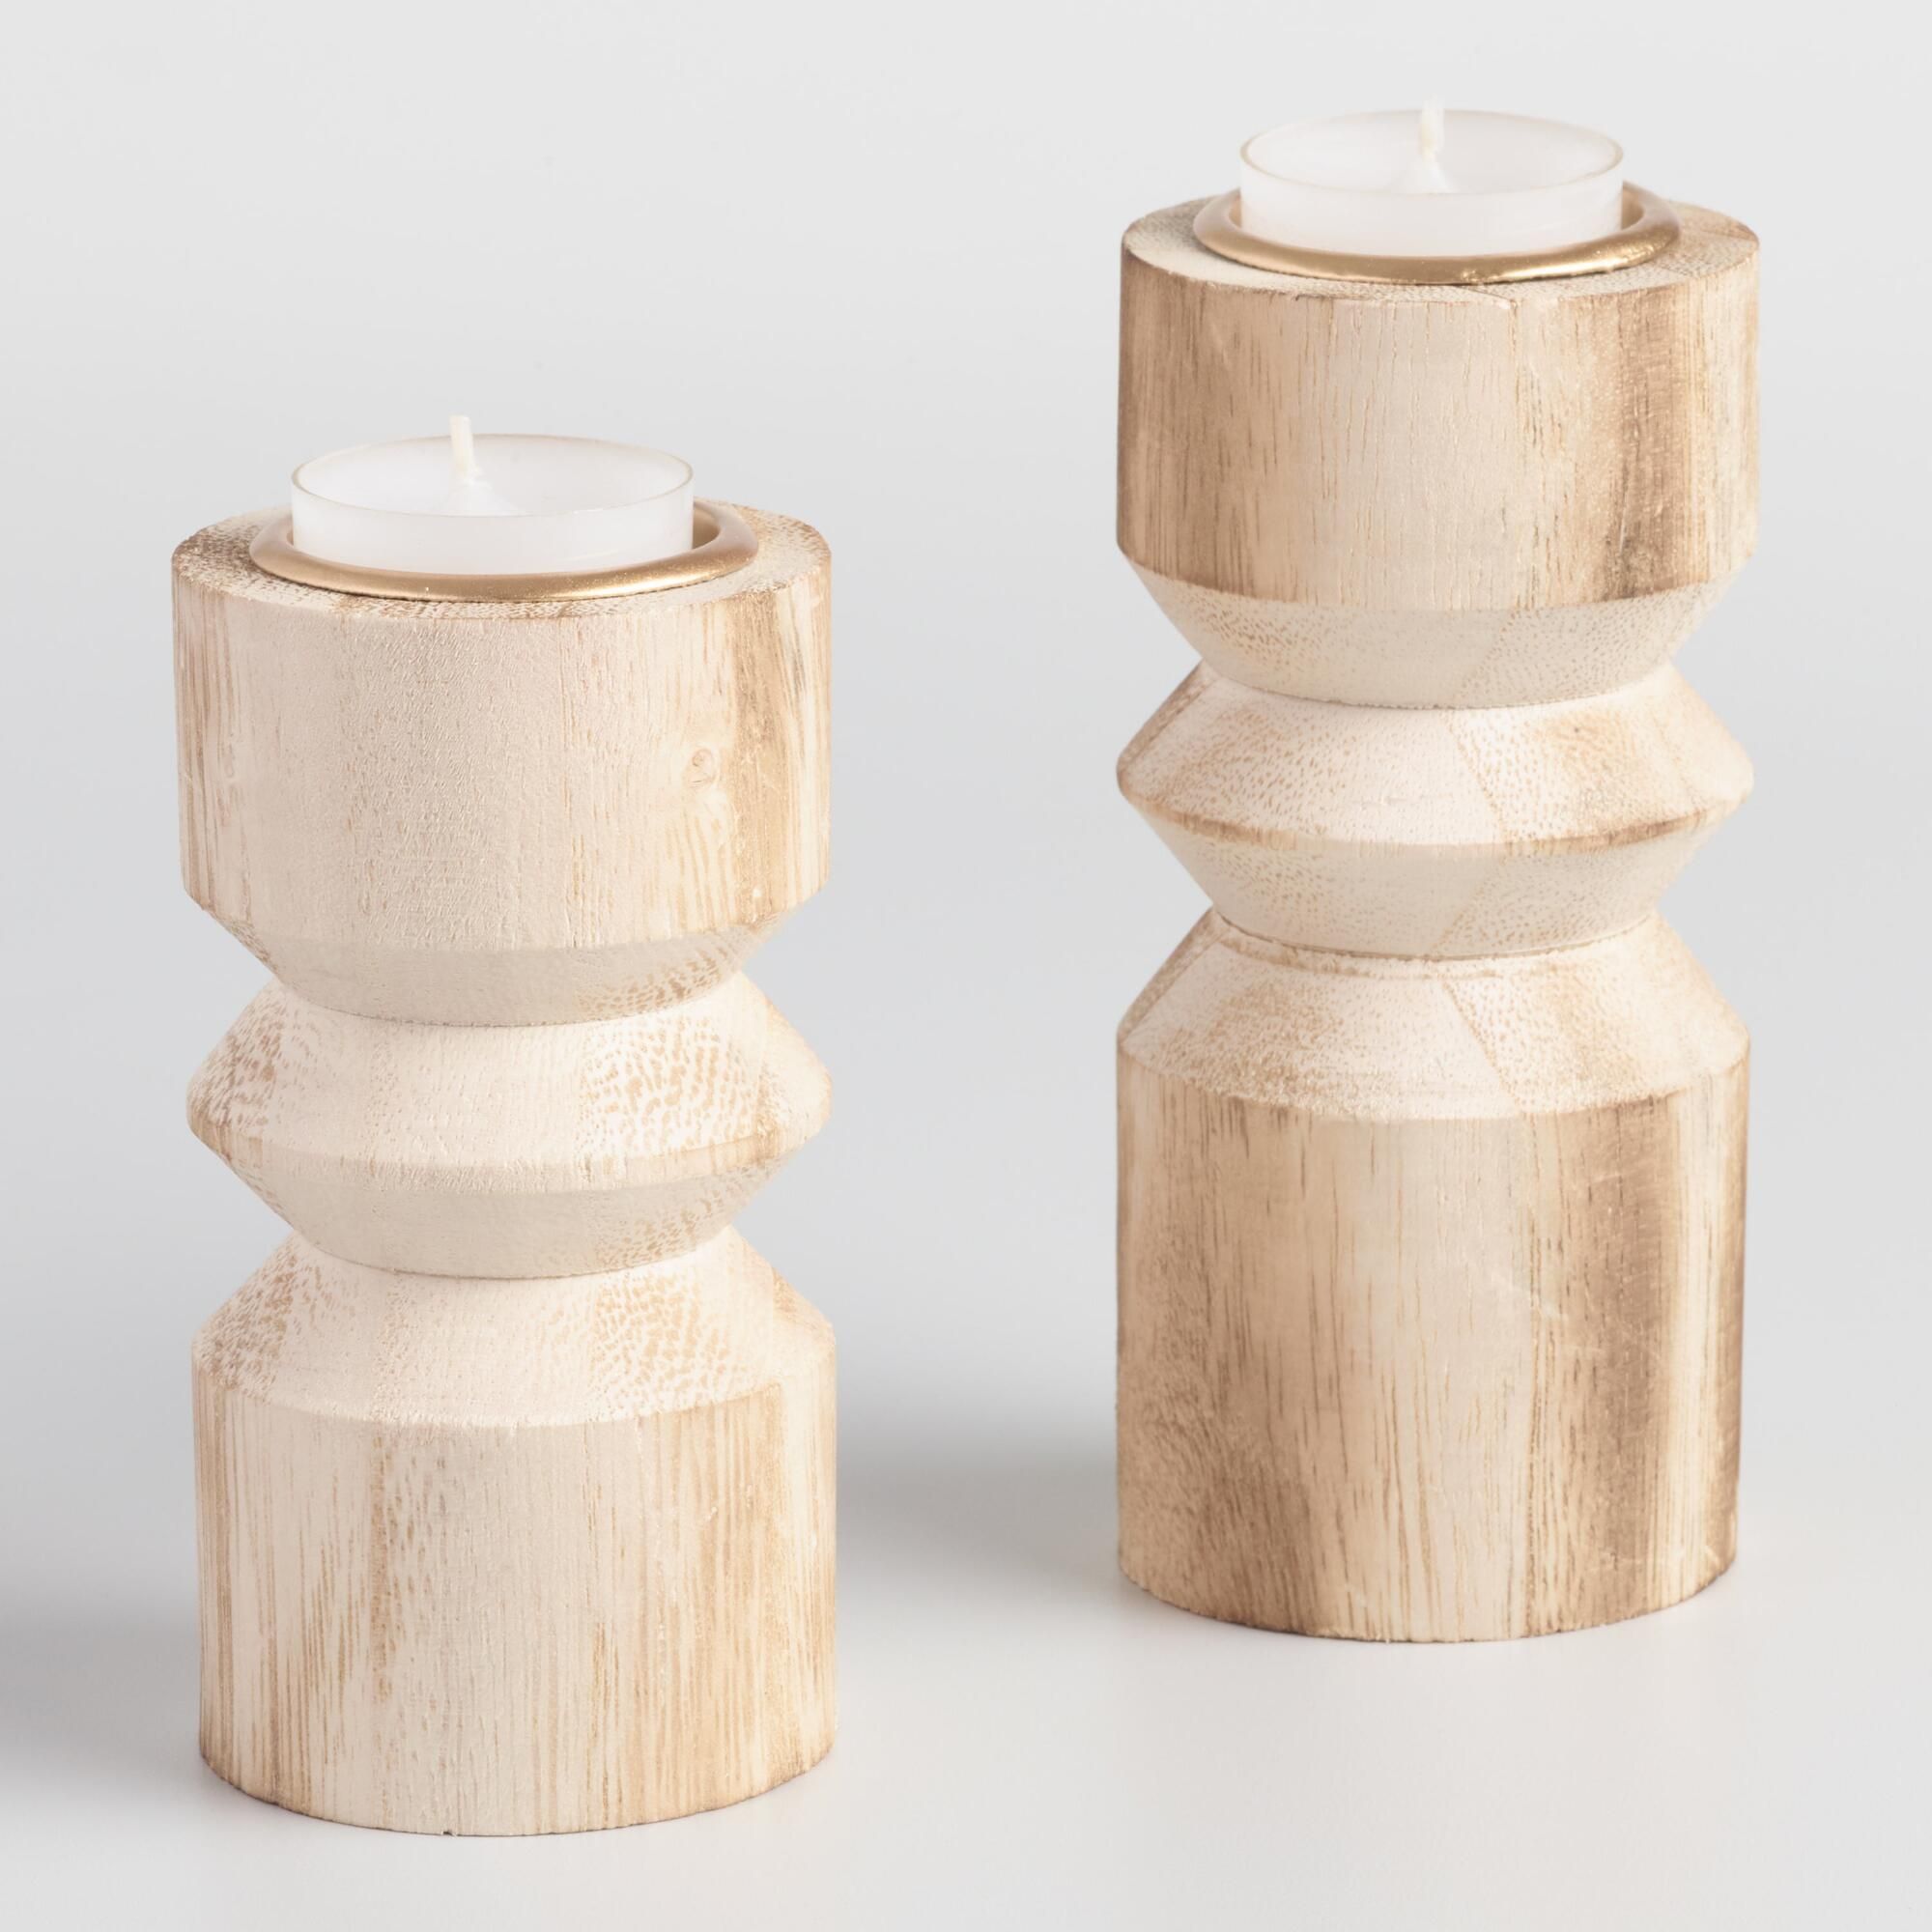 Natural Stacked Wood Tealight Candleholder - 4" by World Market 4" | World Market